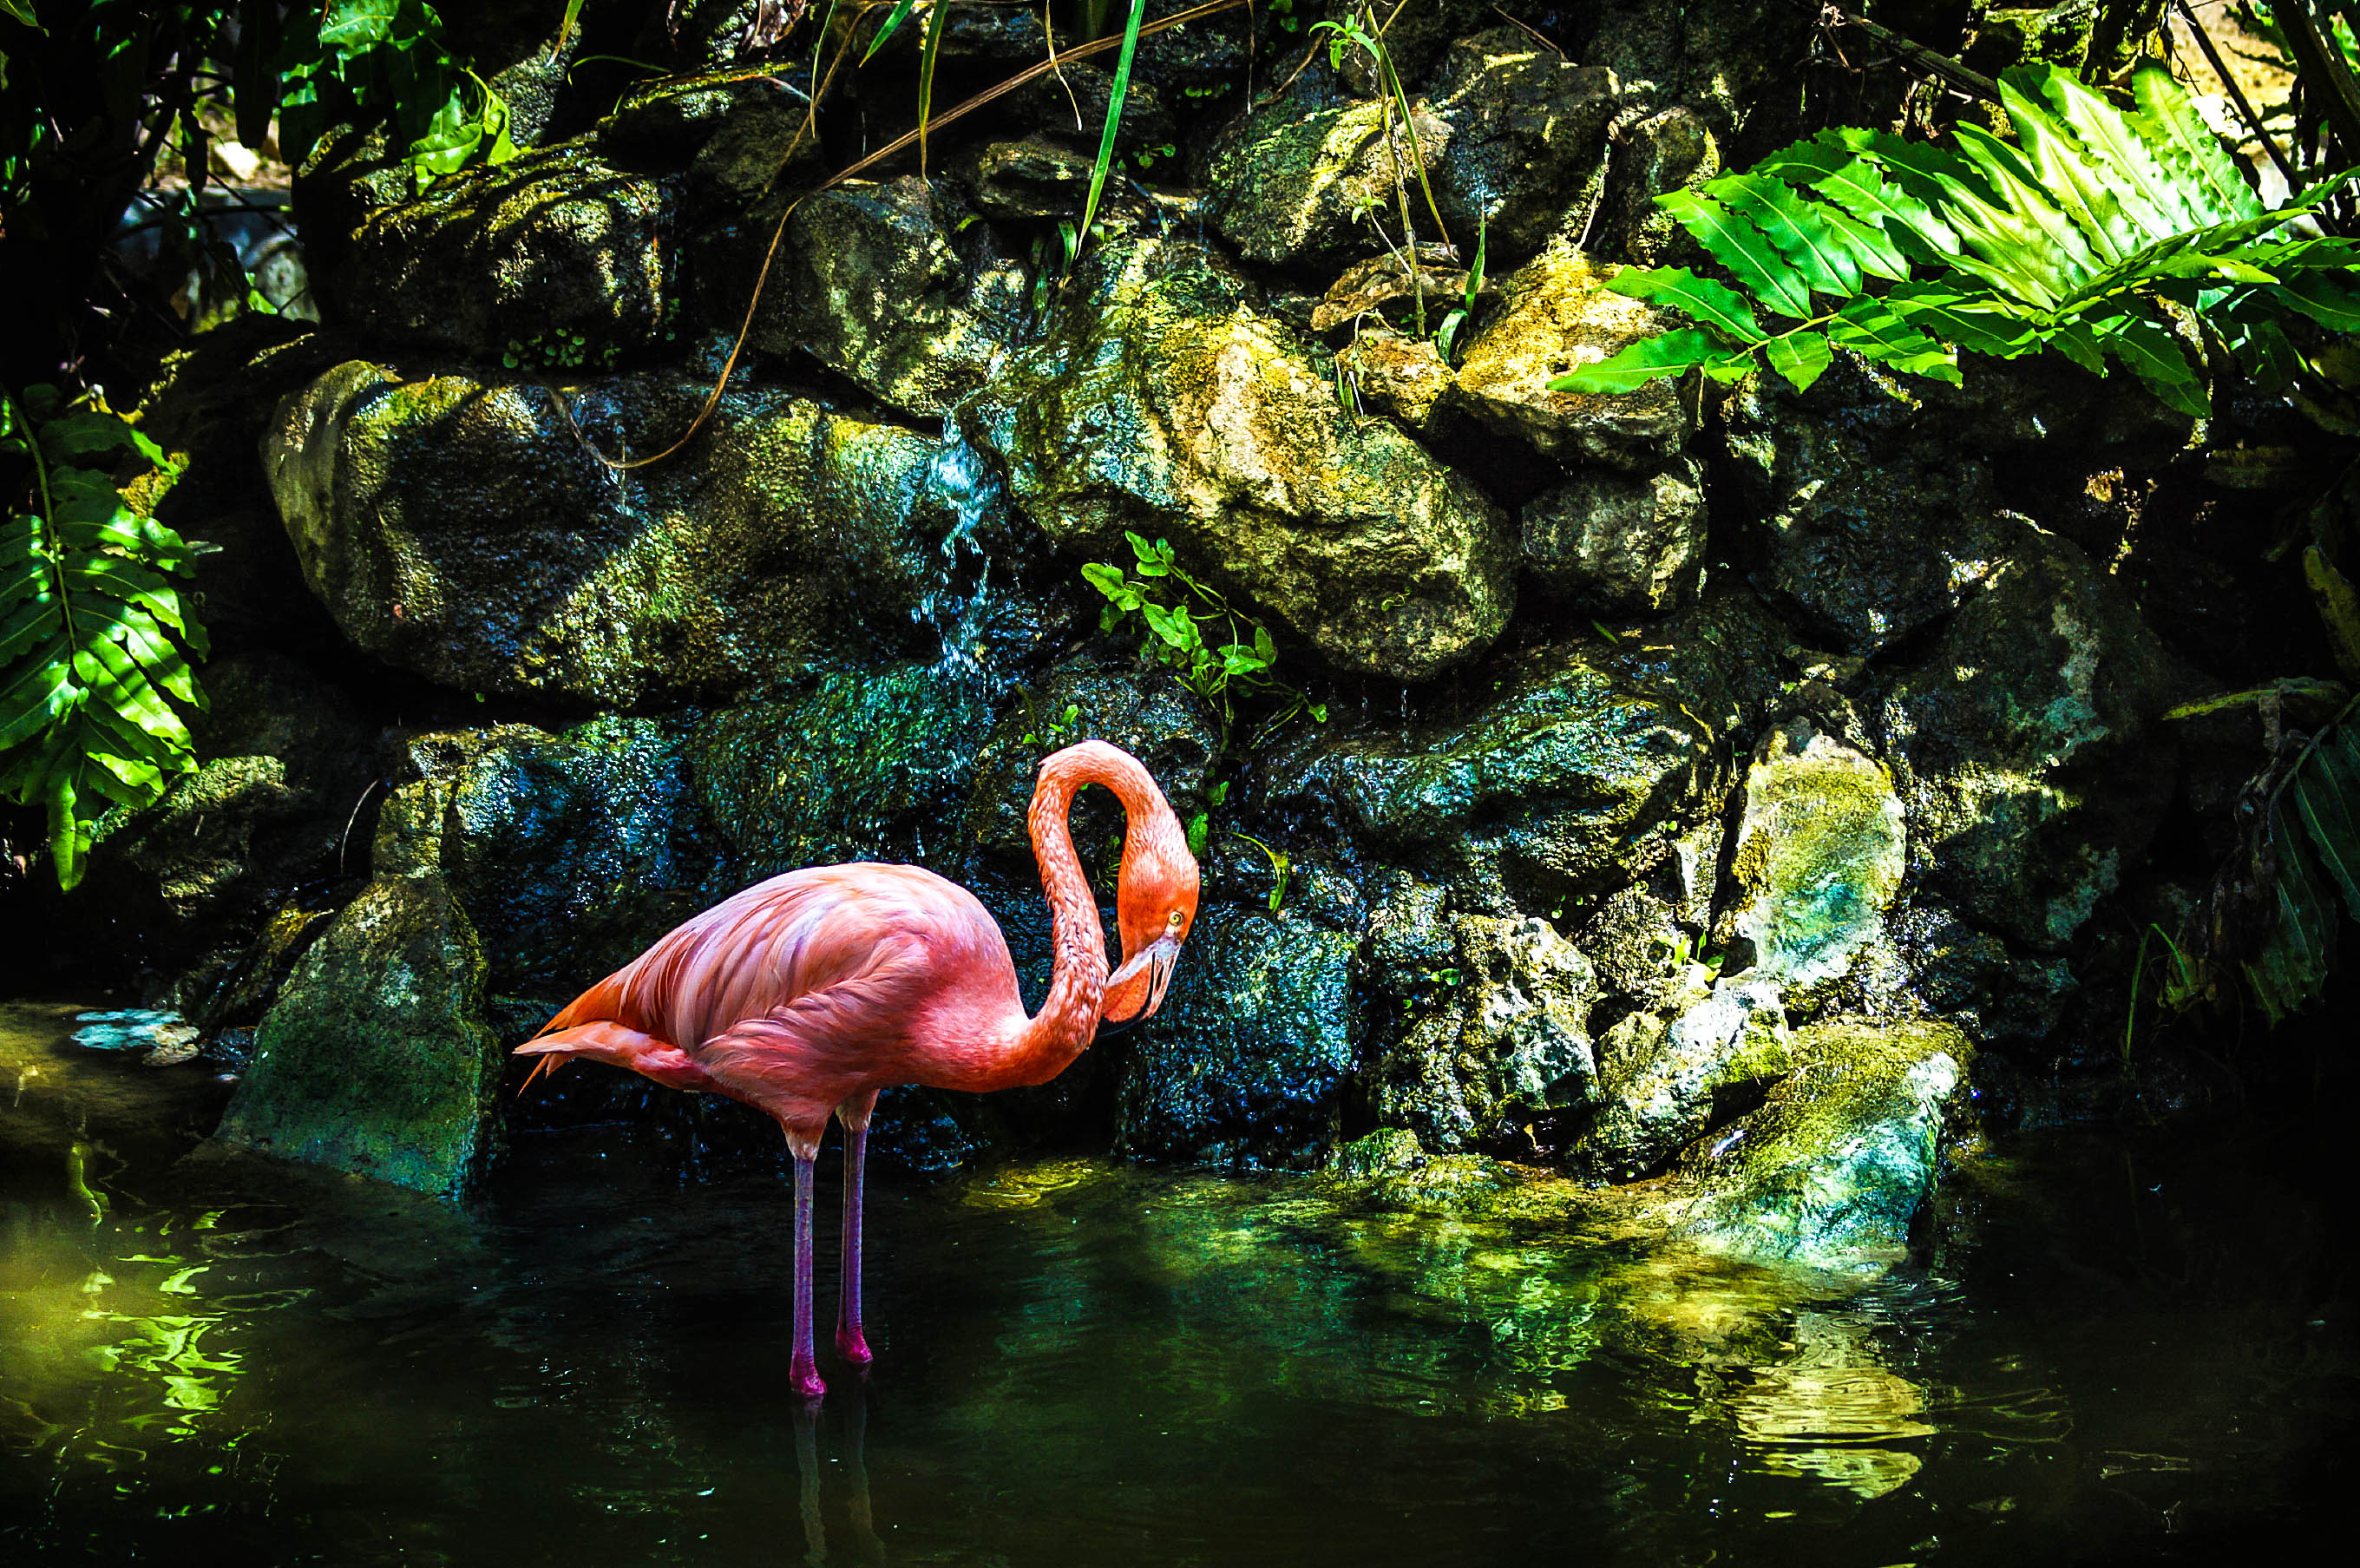 Pink flamingo 